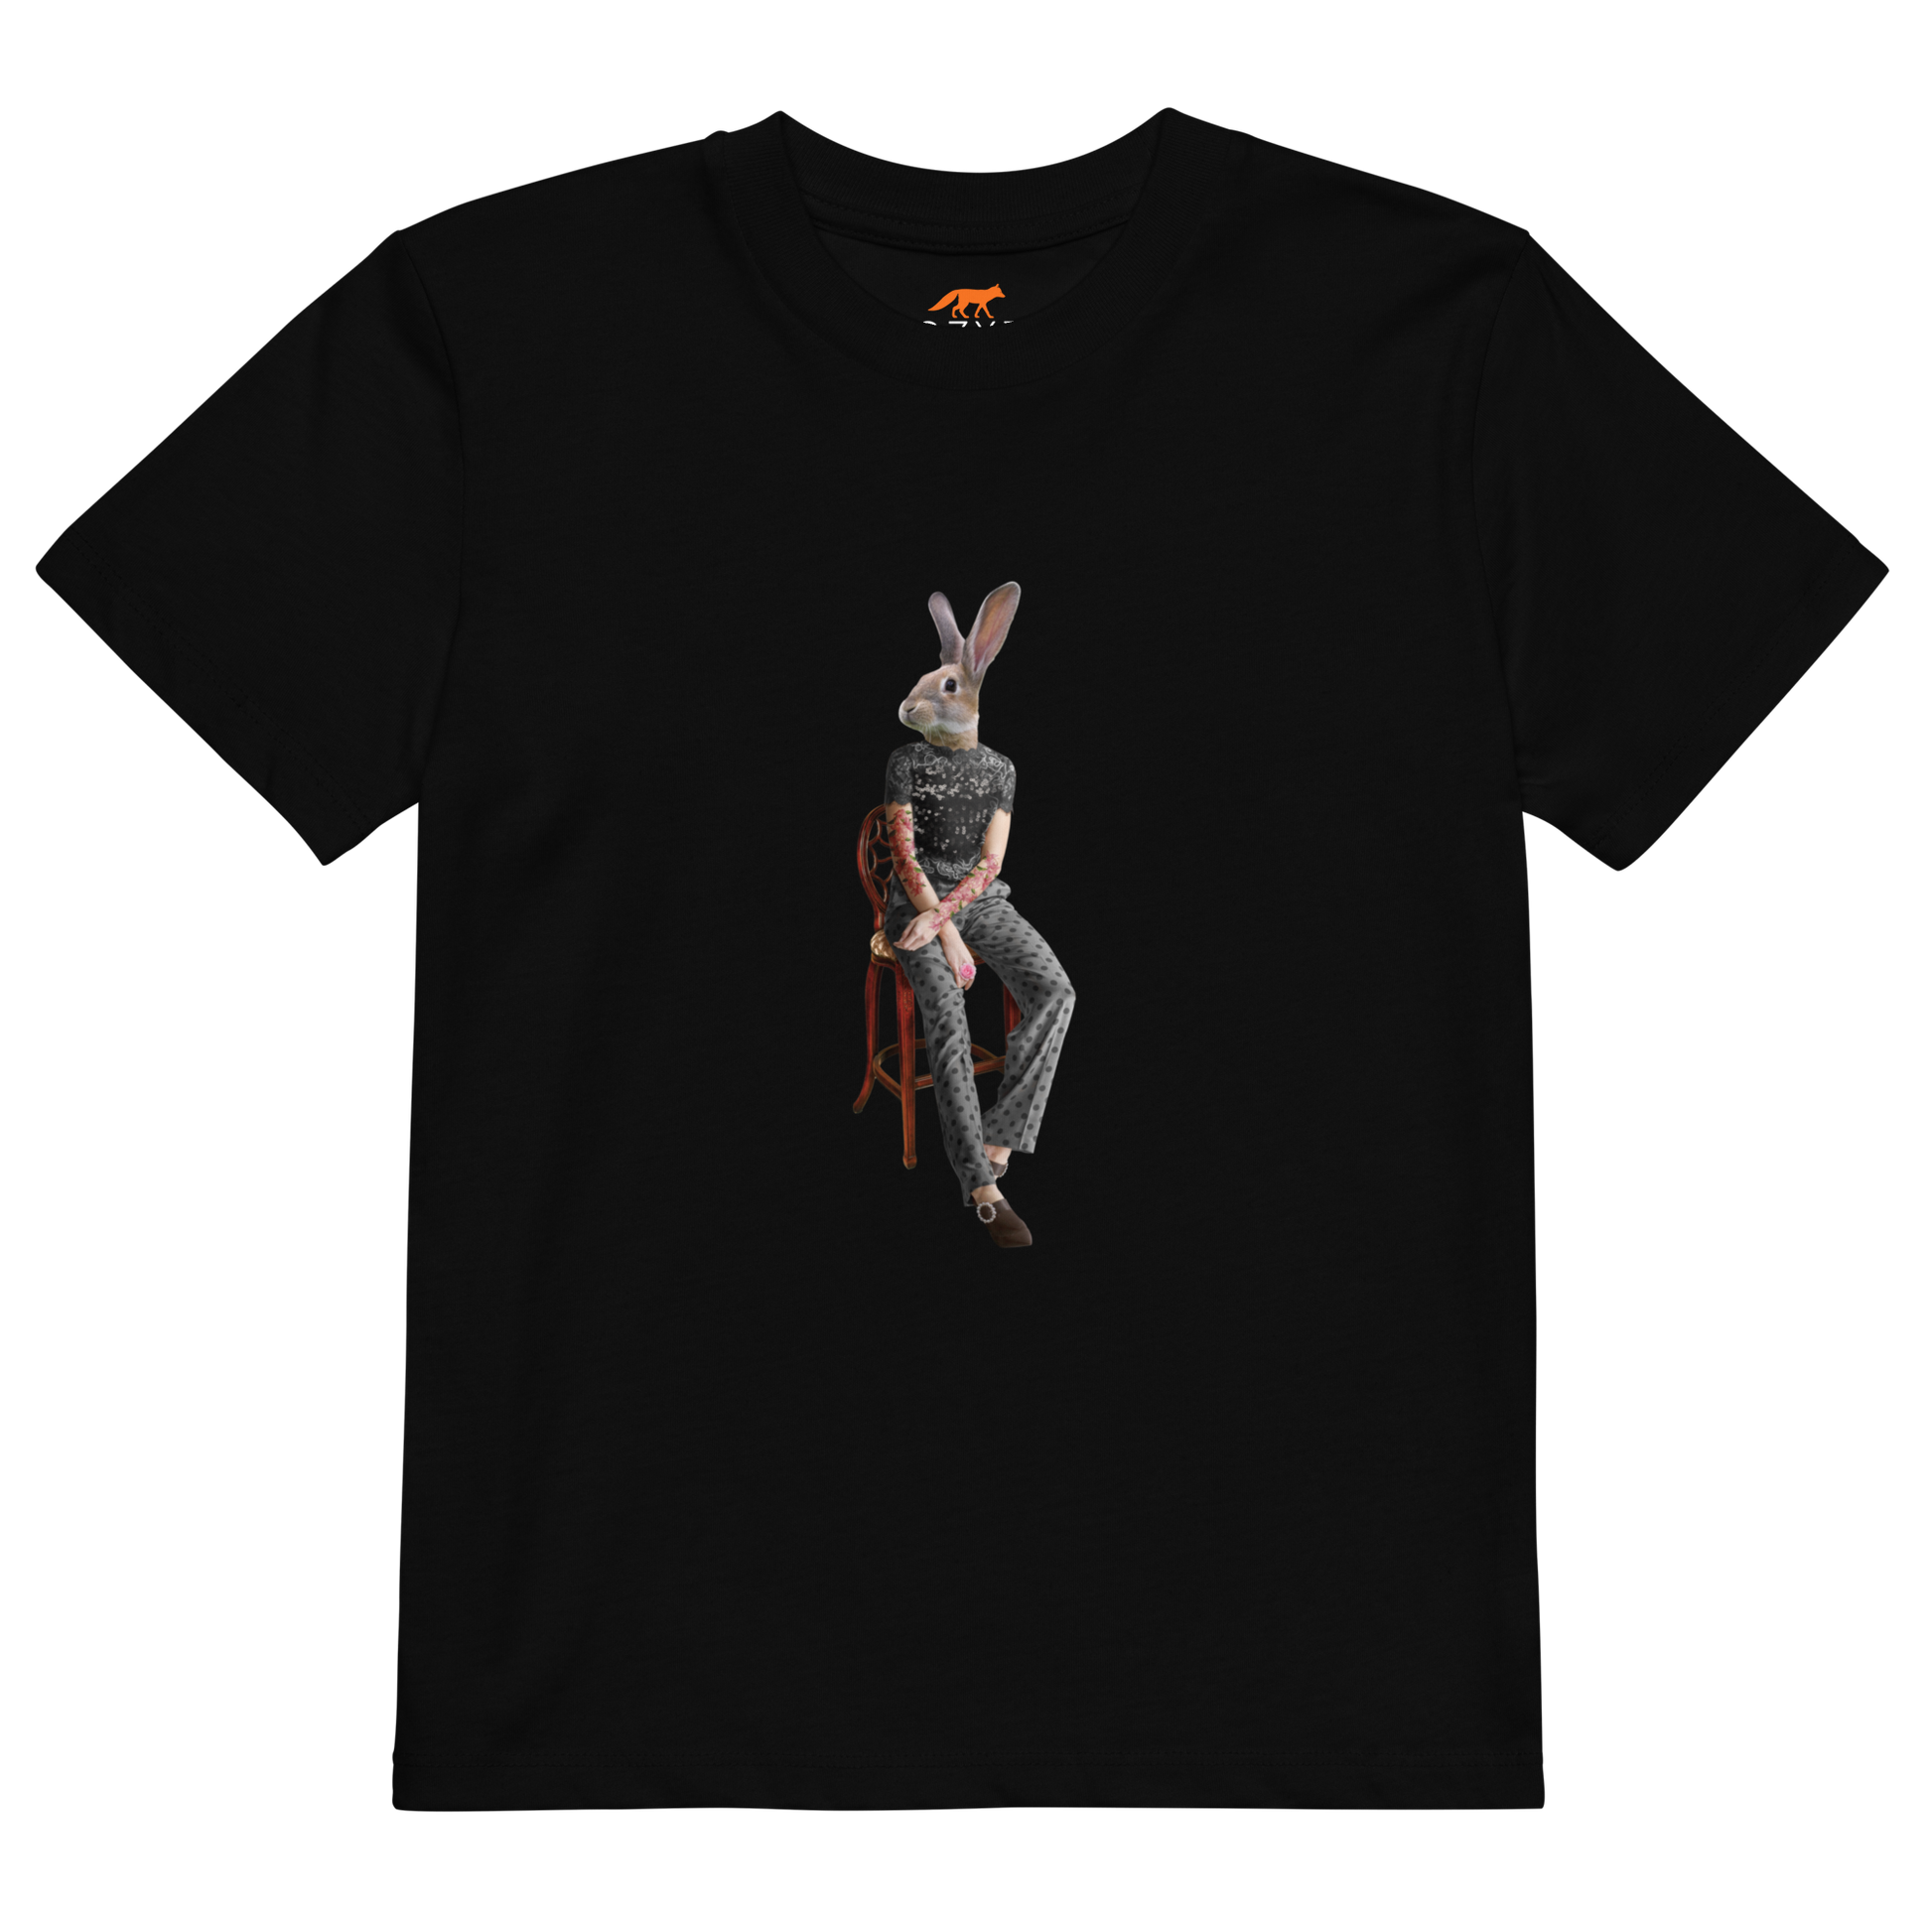 Black Anthropomorphic Rabbit Organic Cotton Kids T-Shirt featuring an Anthropomorphic Rabbit graphic on the chest - Kids' Graphic Tees - Funny Animal T-Shirts - Boozy Fox